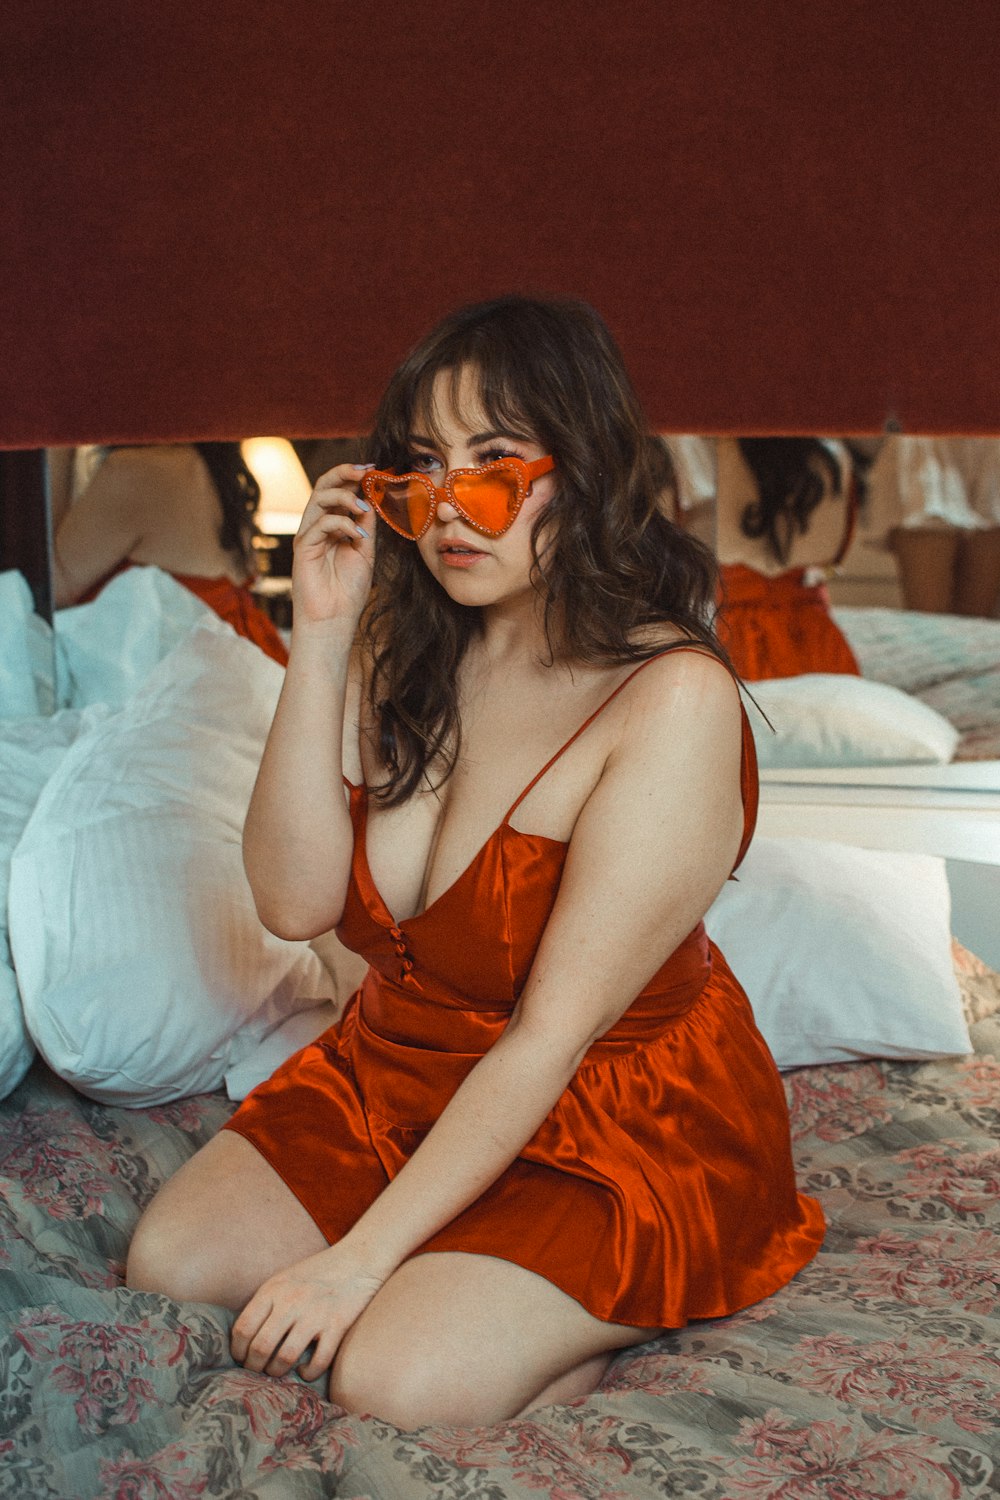 woman wearing orange spaghetti strap dress sitting on bed